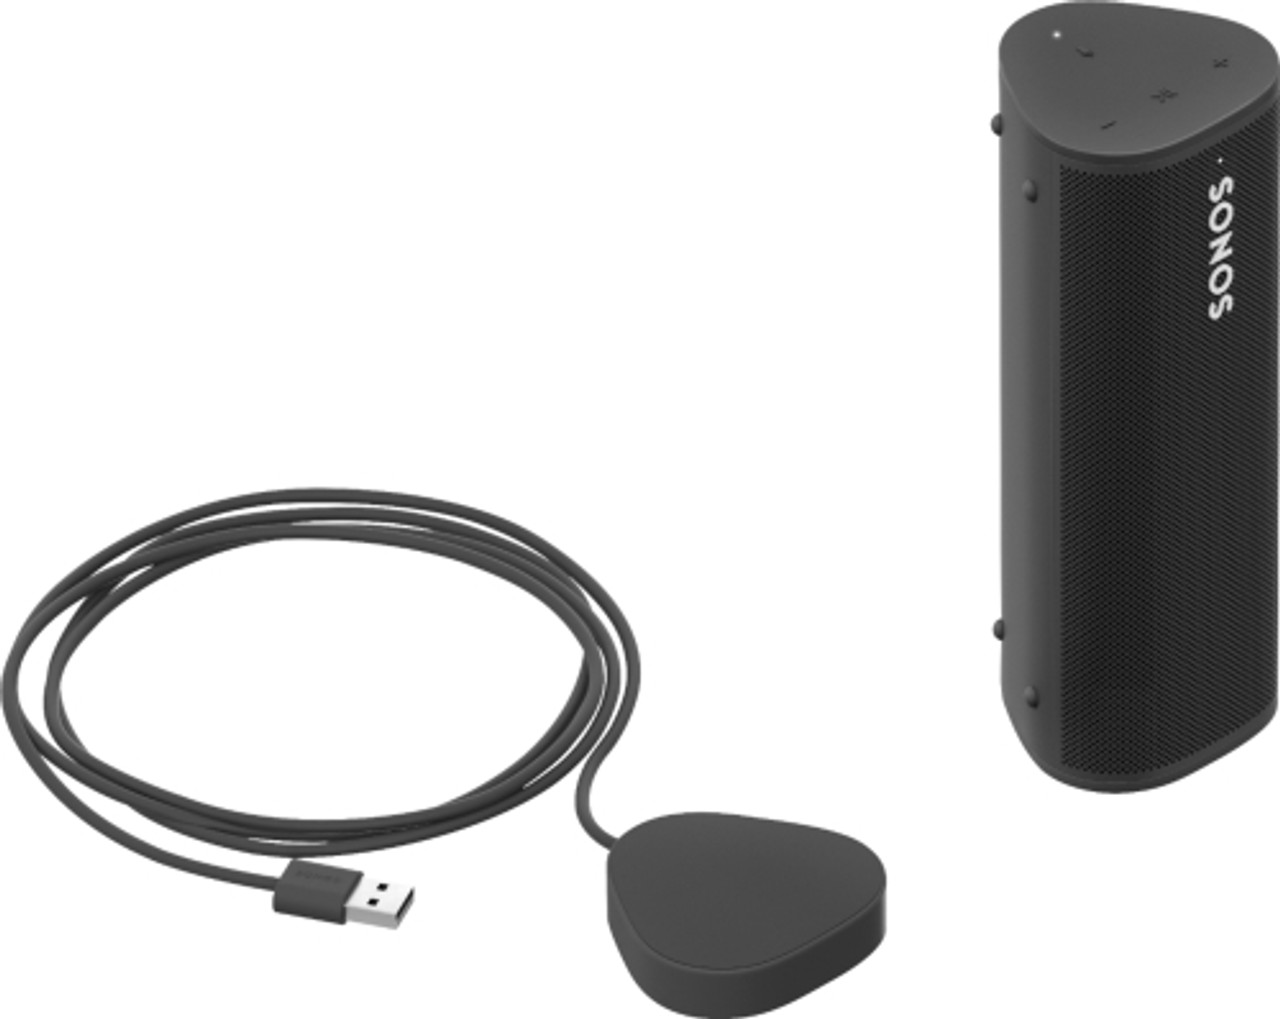 Sonos - Roam Wireless Charger - Black